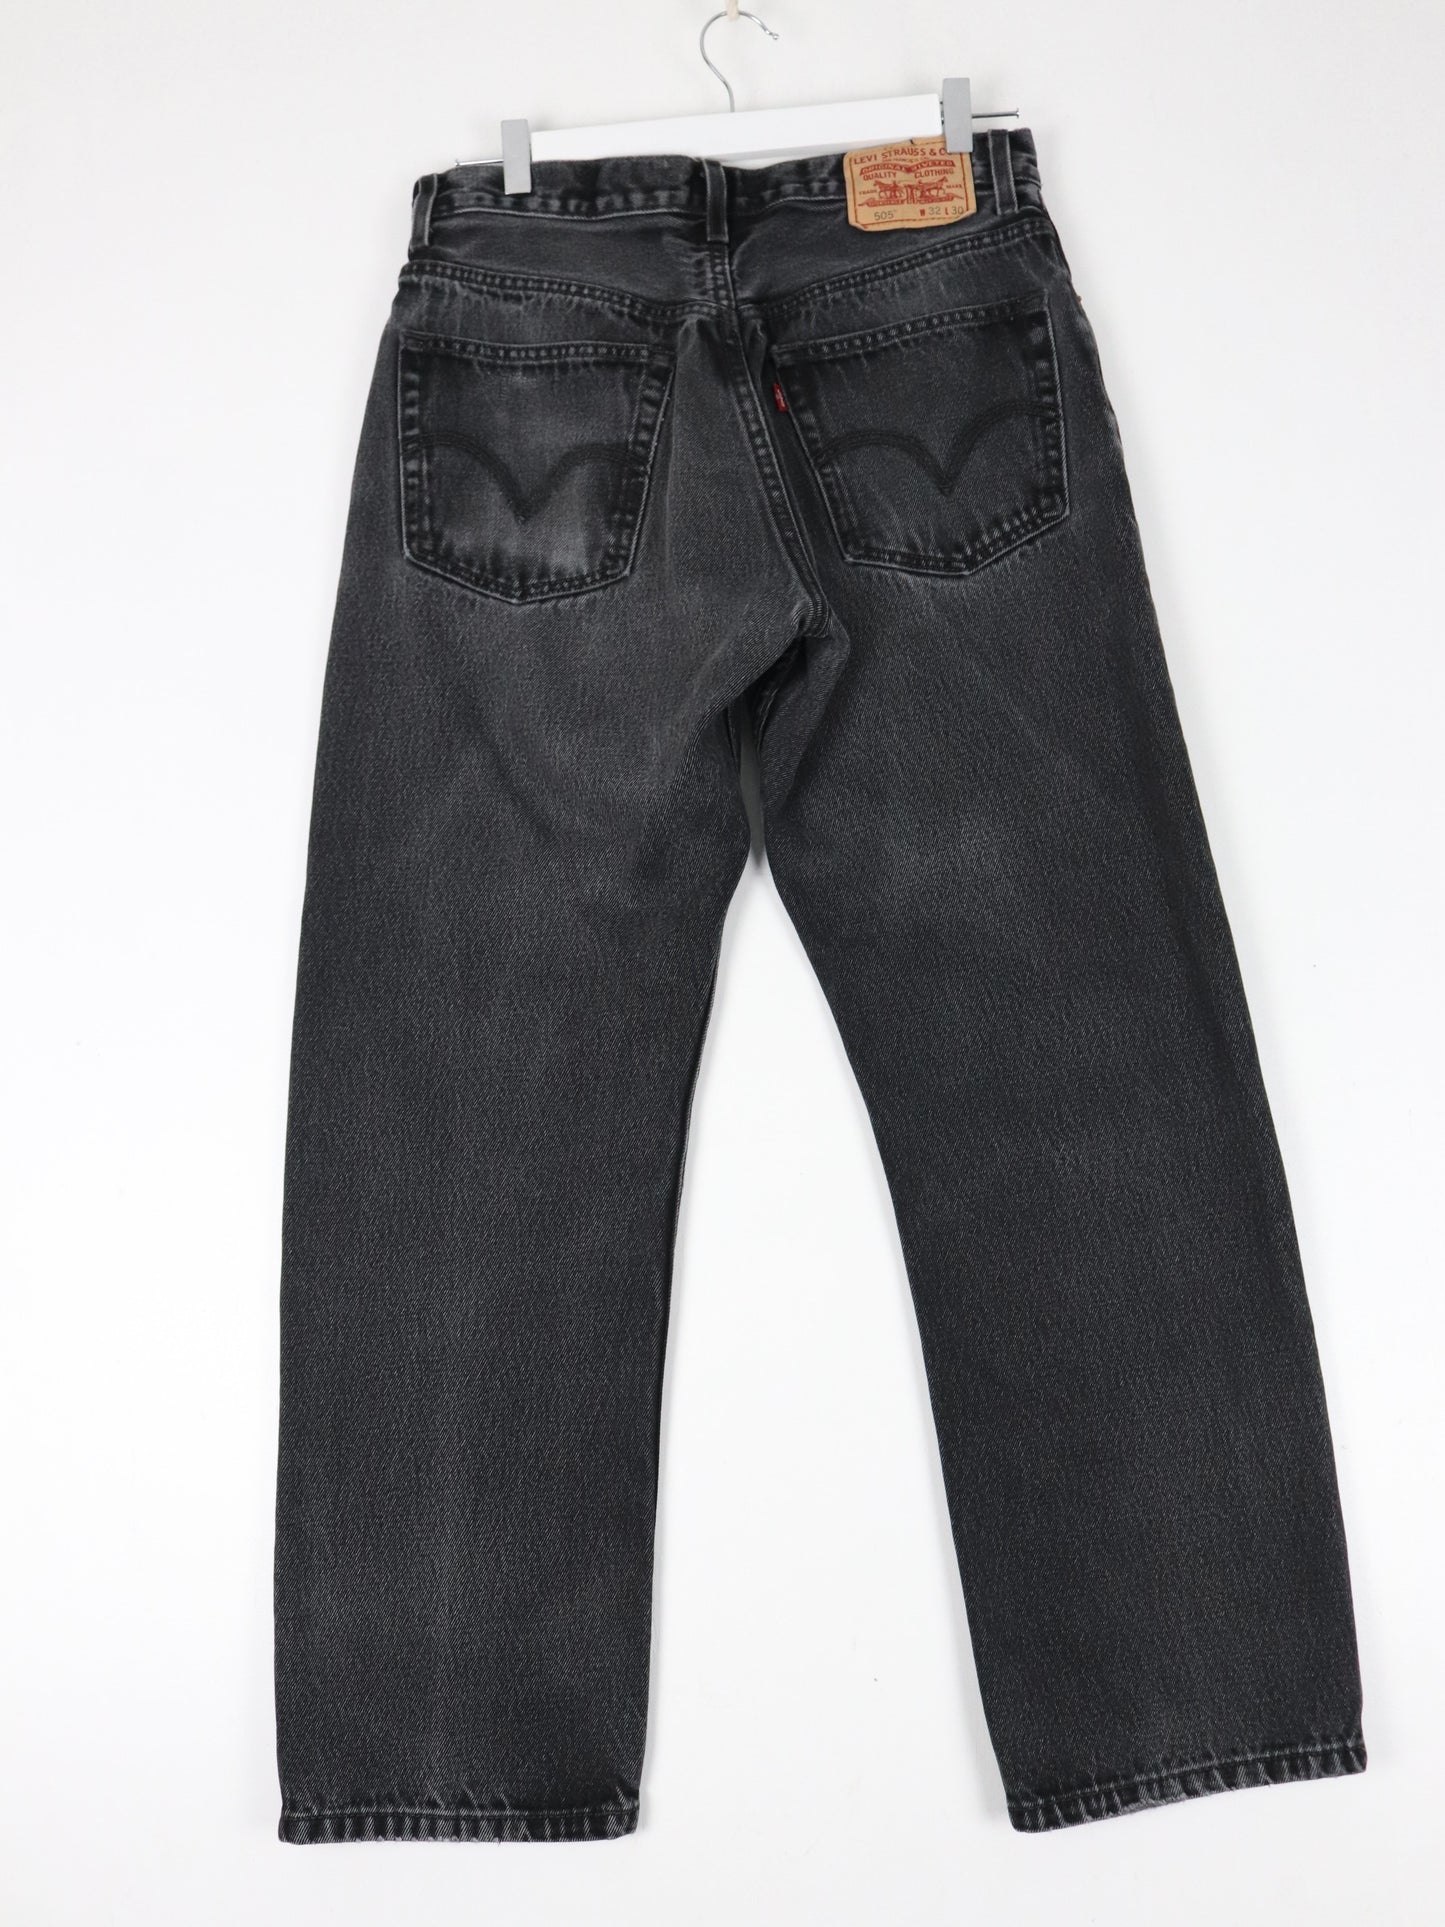 Vintage Levi's Pants Fits Mens 30 x 28 Black Denim Jeans 505 Regular